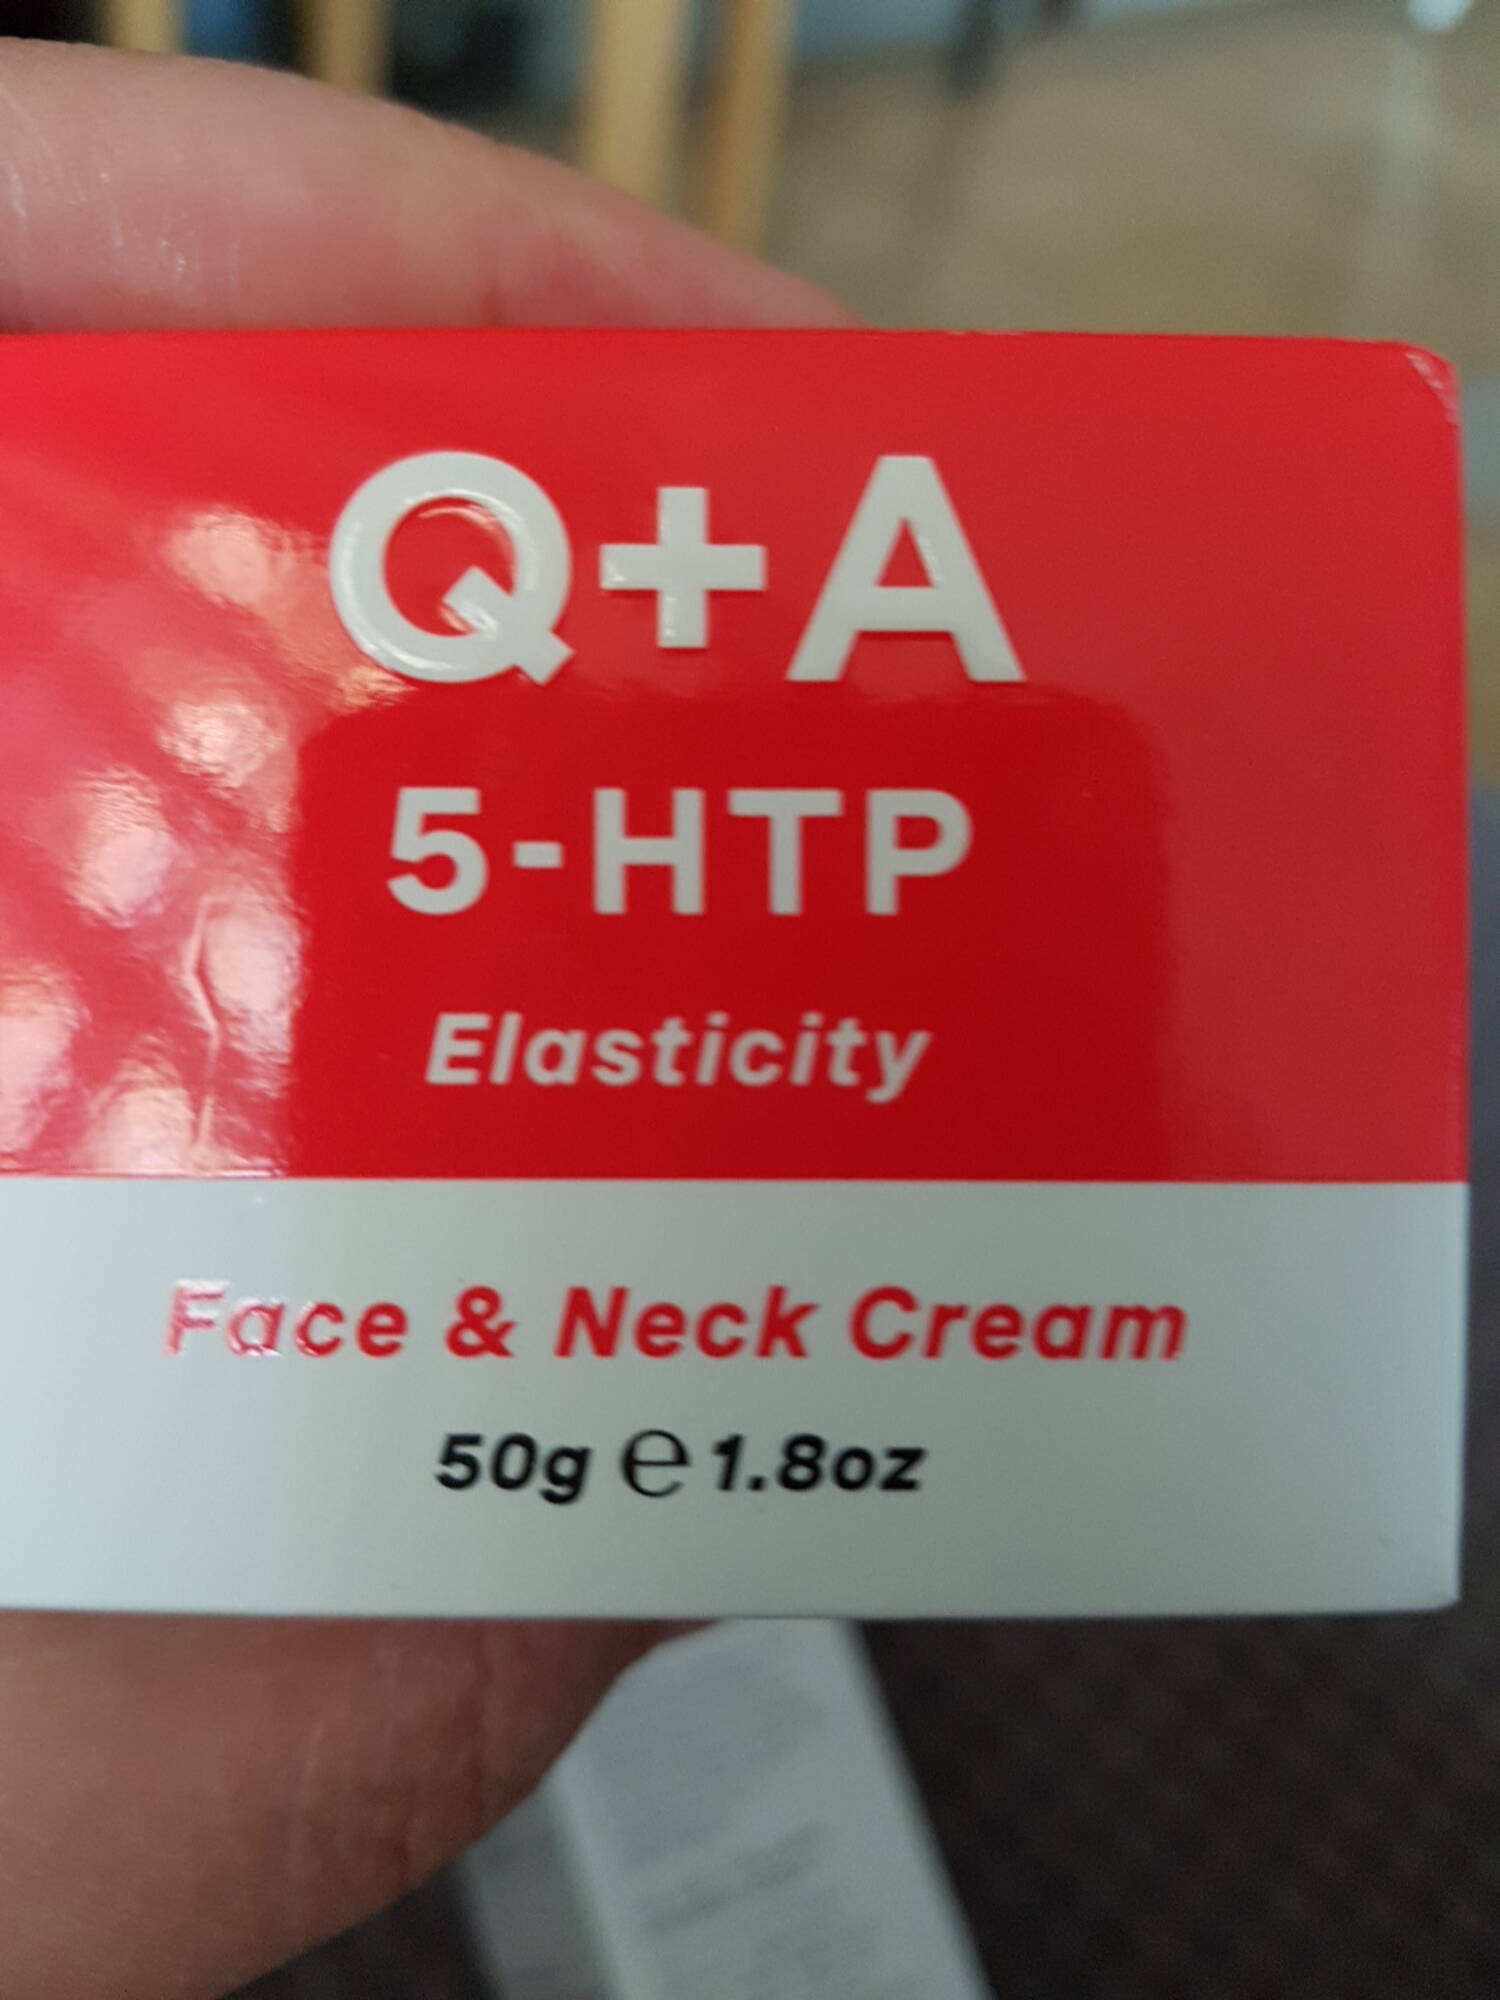 Q+A - 5-HTP elasticity - Face & neck cream